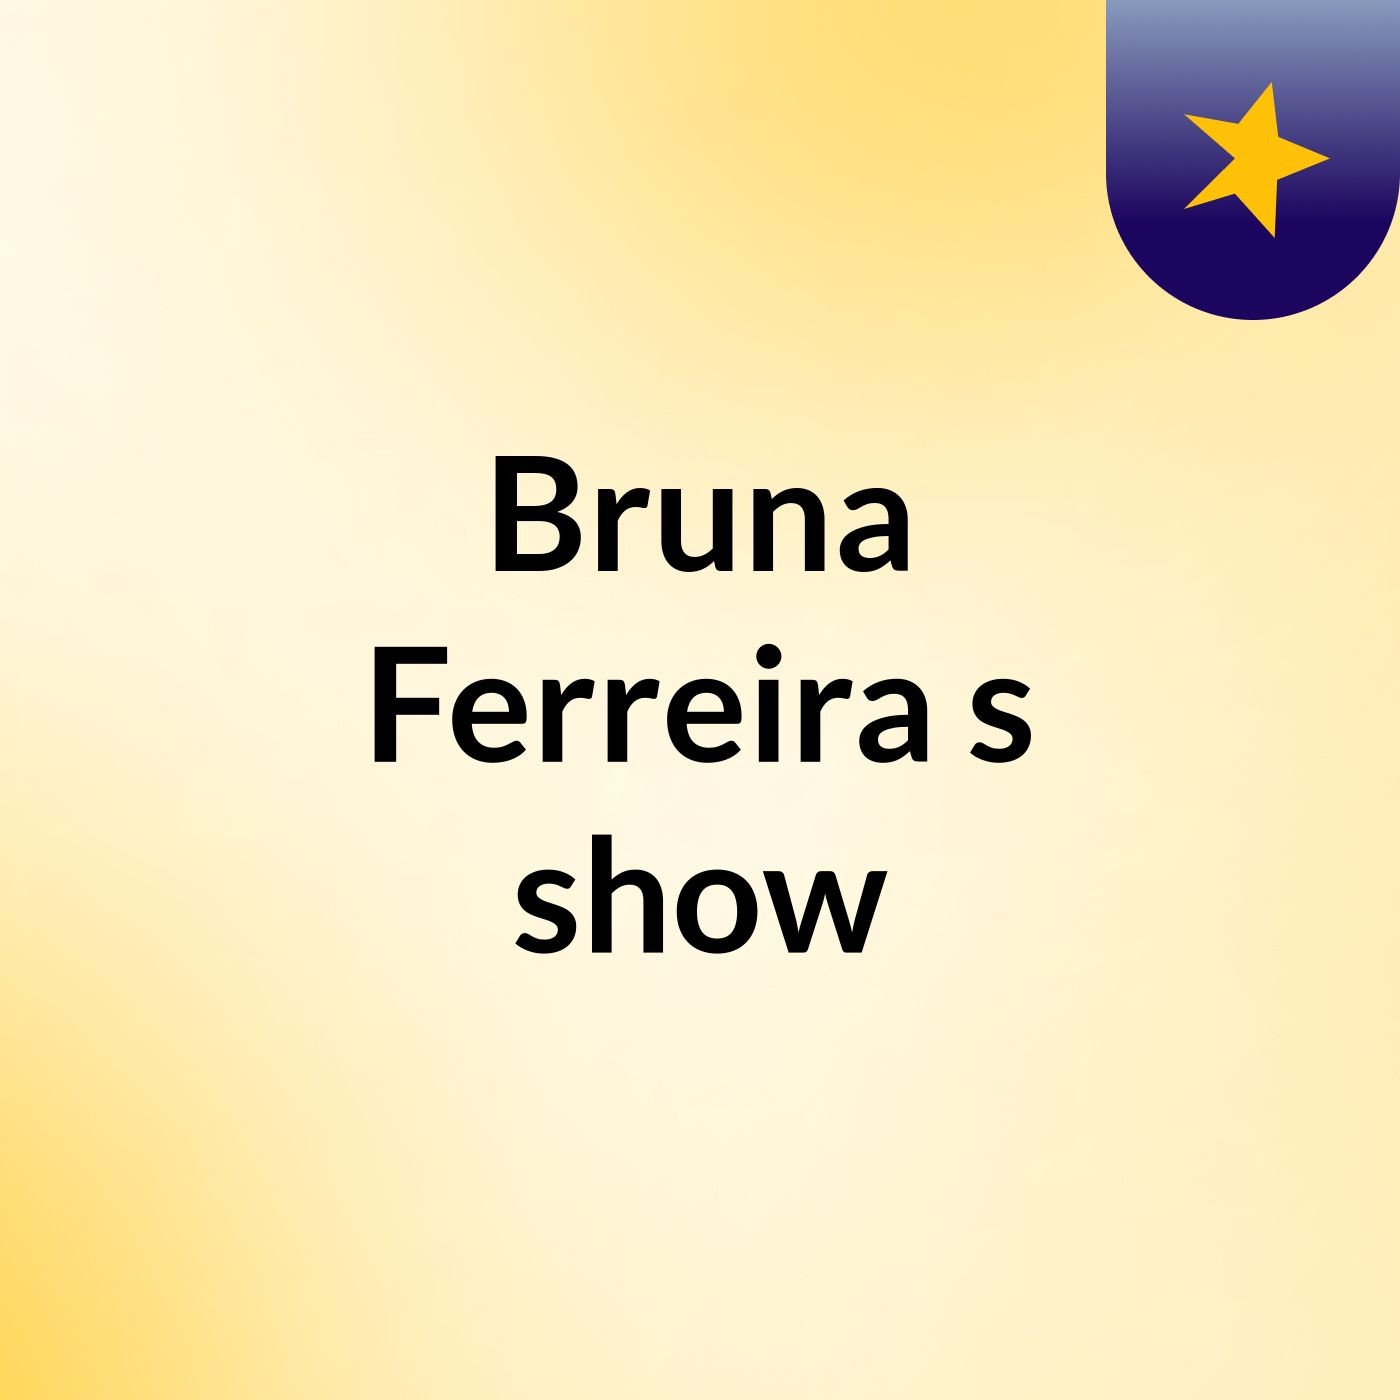 Bruna Ferreira's show